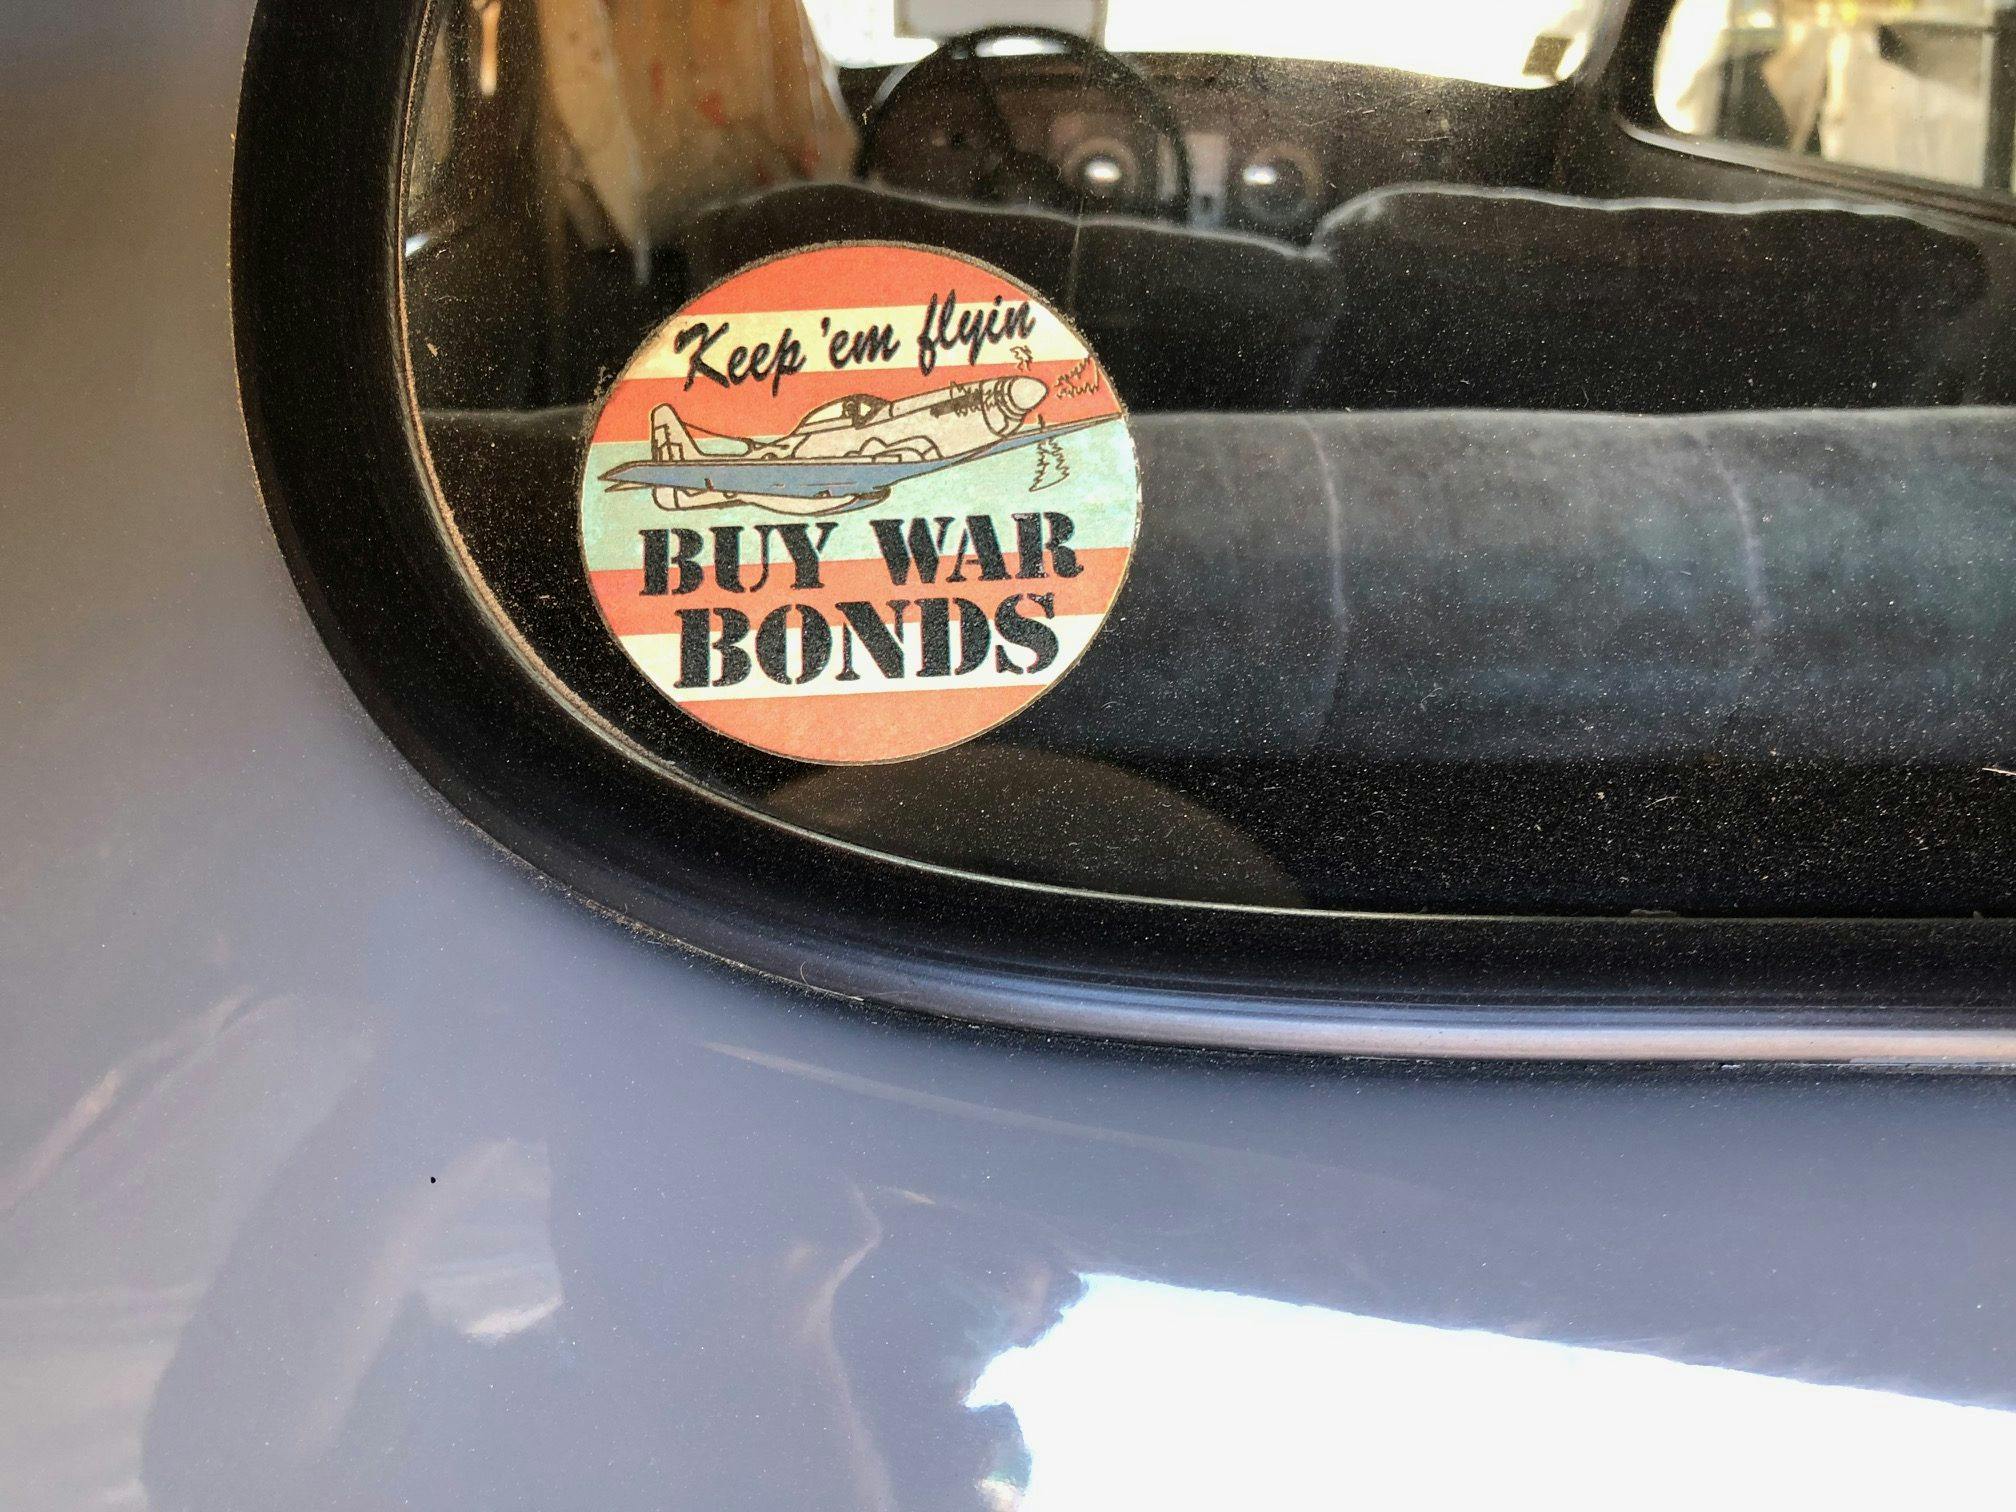 Himes Museum buy war bonds sticker